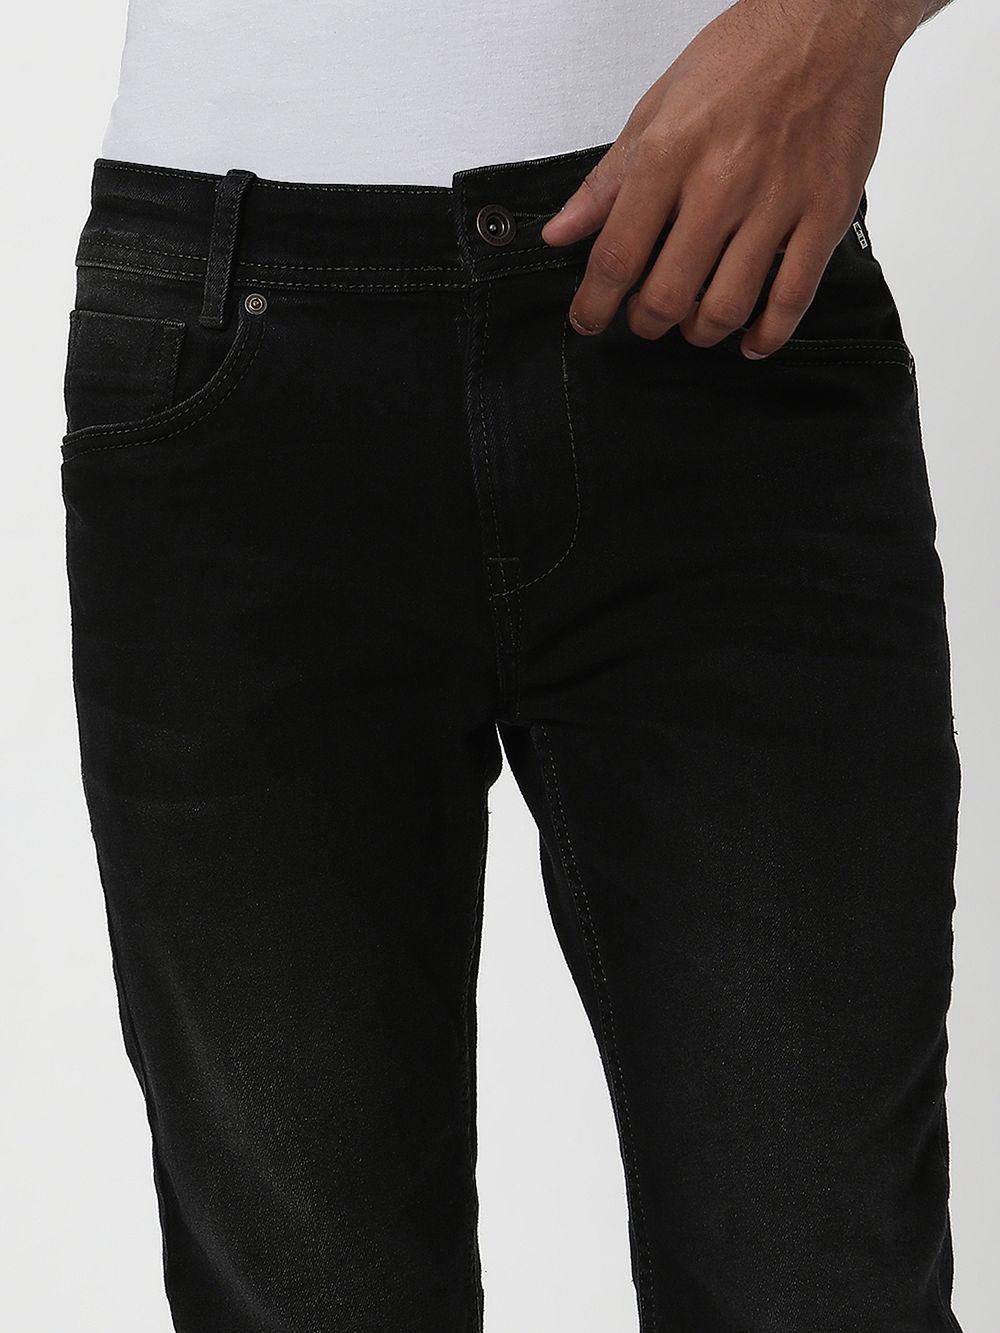 Black Narrow Fit Originals Stretch Jeans